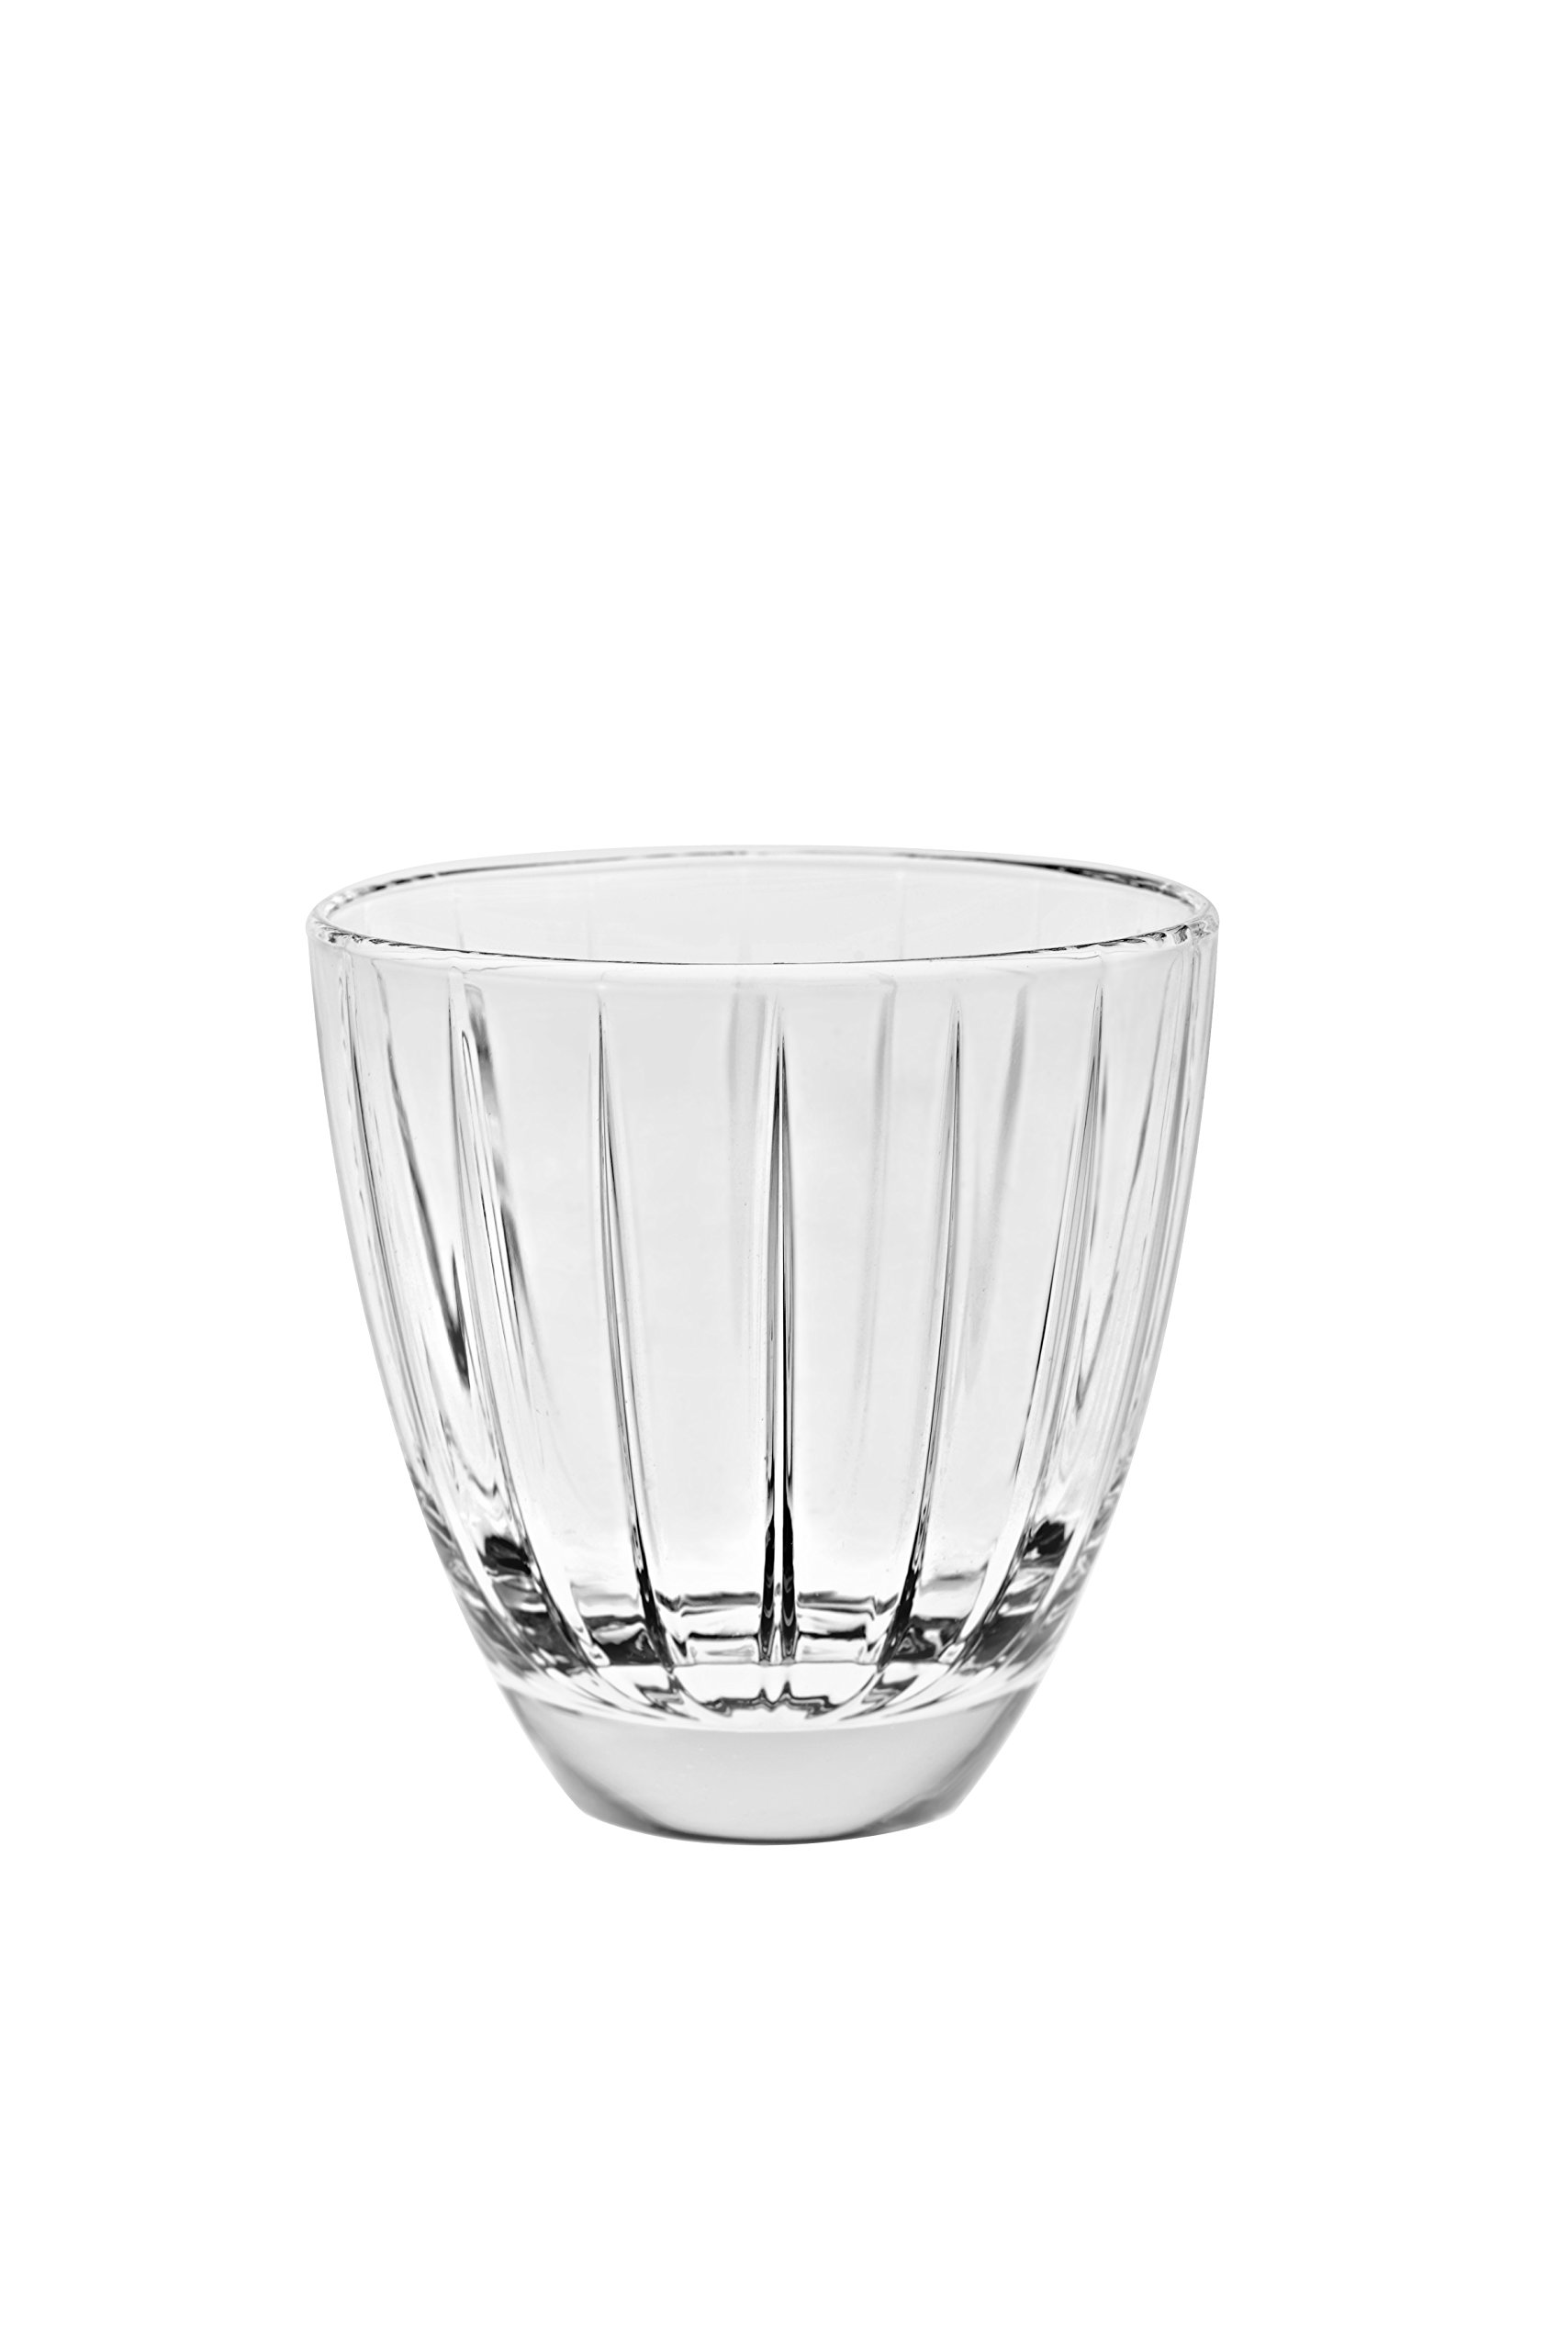 Barski - European Glass - Double Old Fashioned Tumbler Glasses - Uniquely Designed - Set of 6-12 oz. - Made in Europe